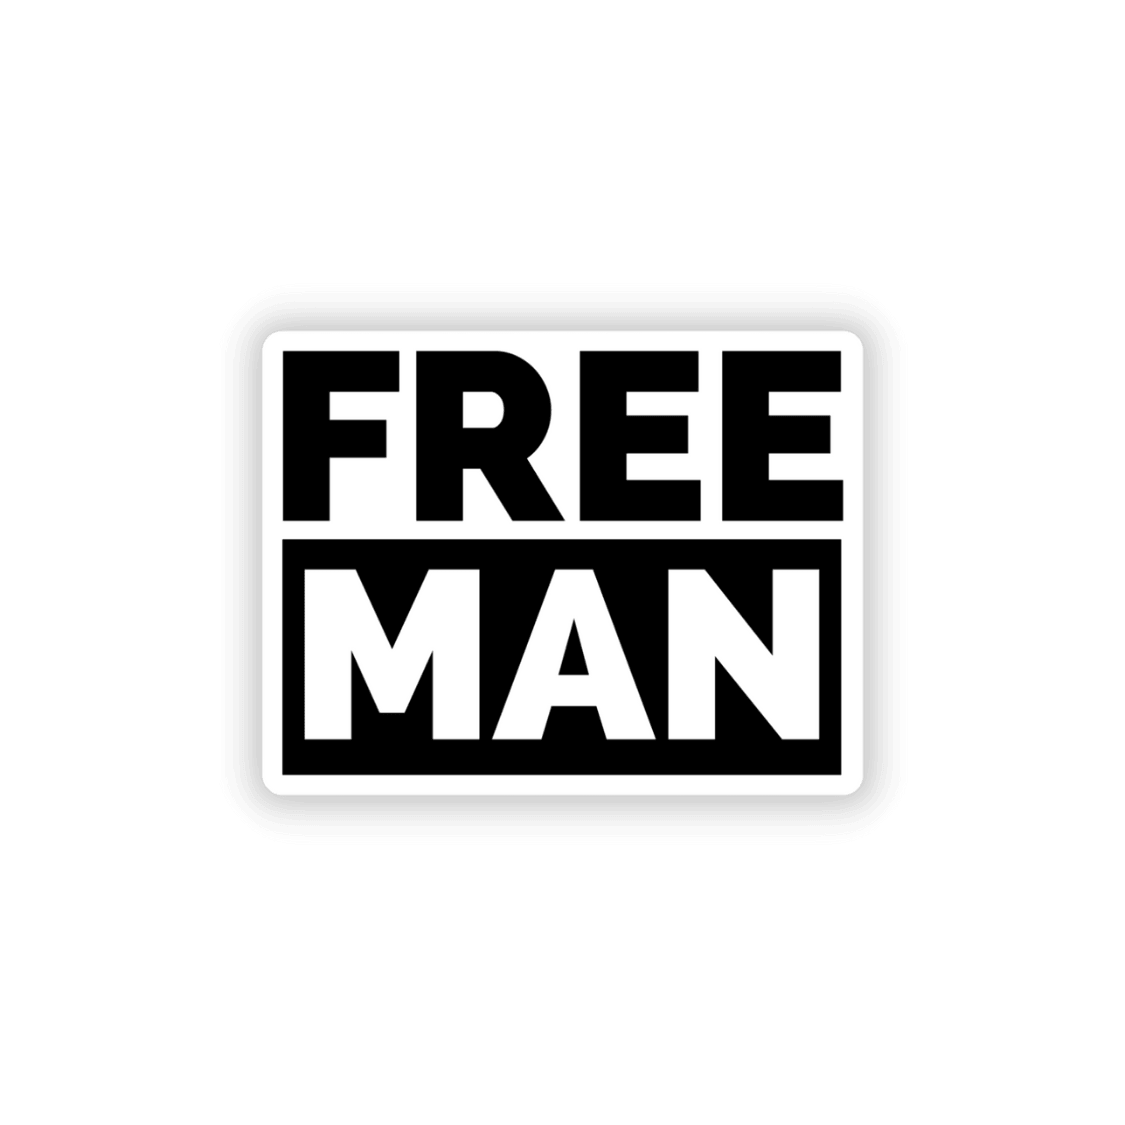 HRDY FREE MAN STICKER - Hardysoap